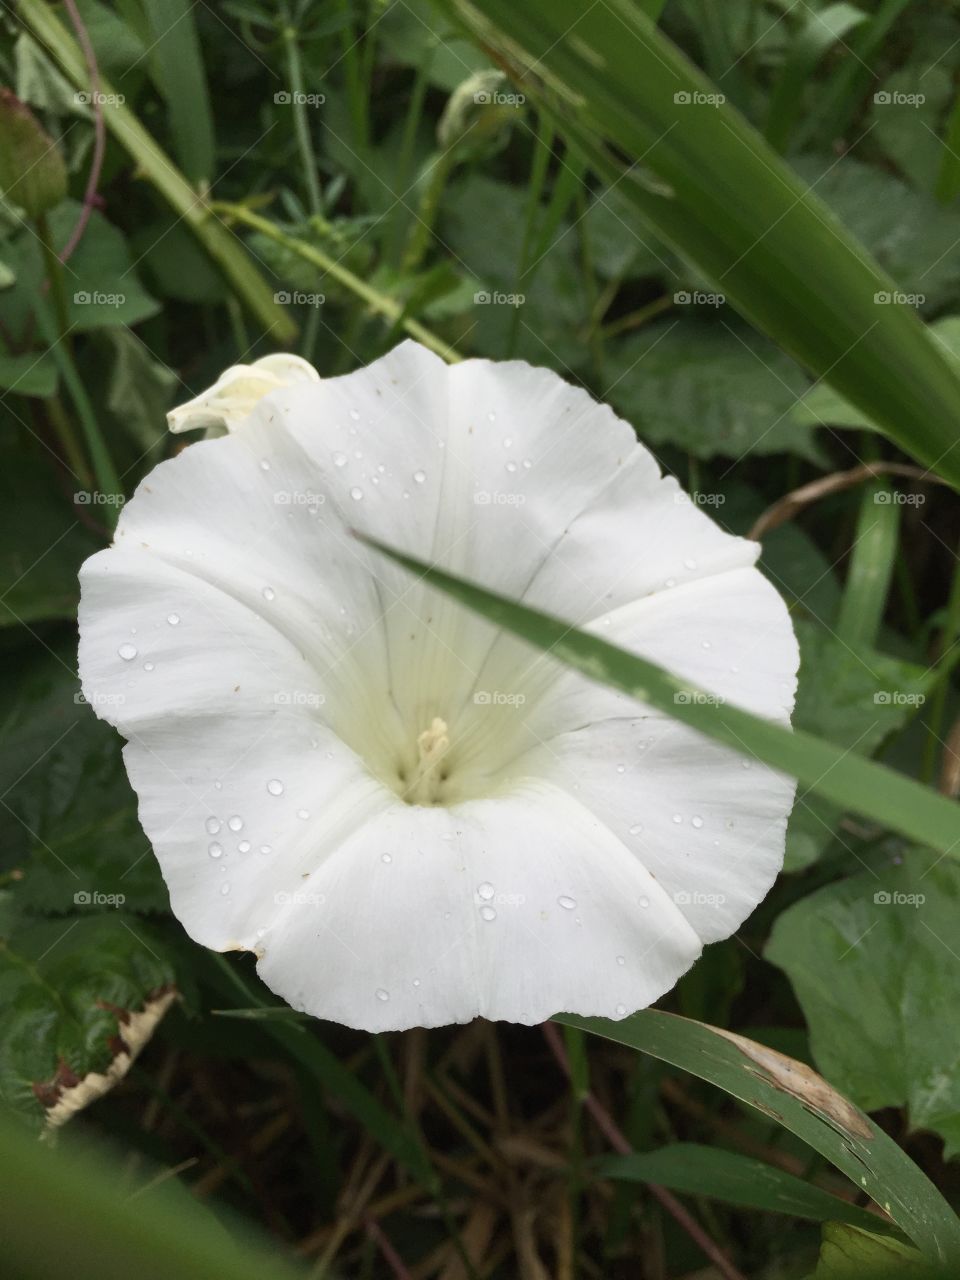 Rain drops on a Datura flower